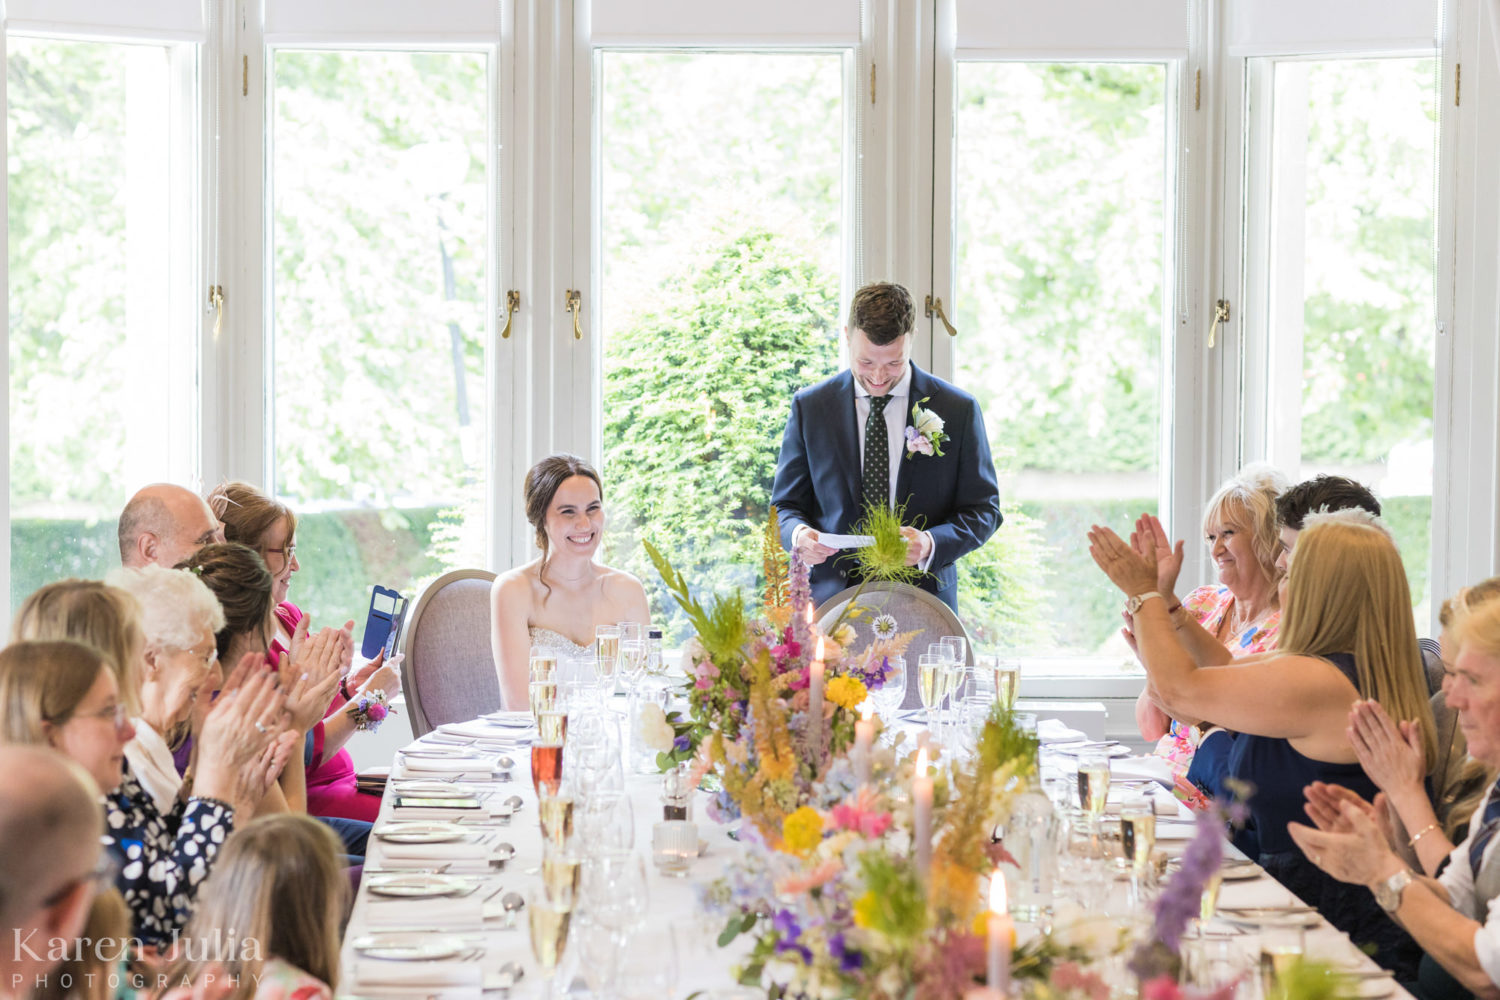 groom delivers speech in the Glenlivet room as guests watch